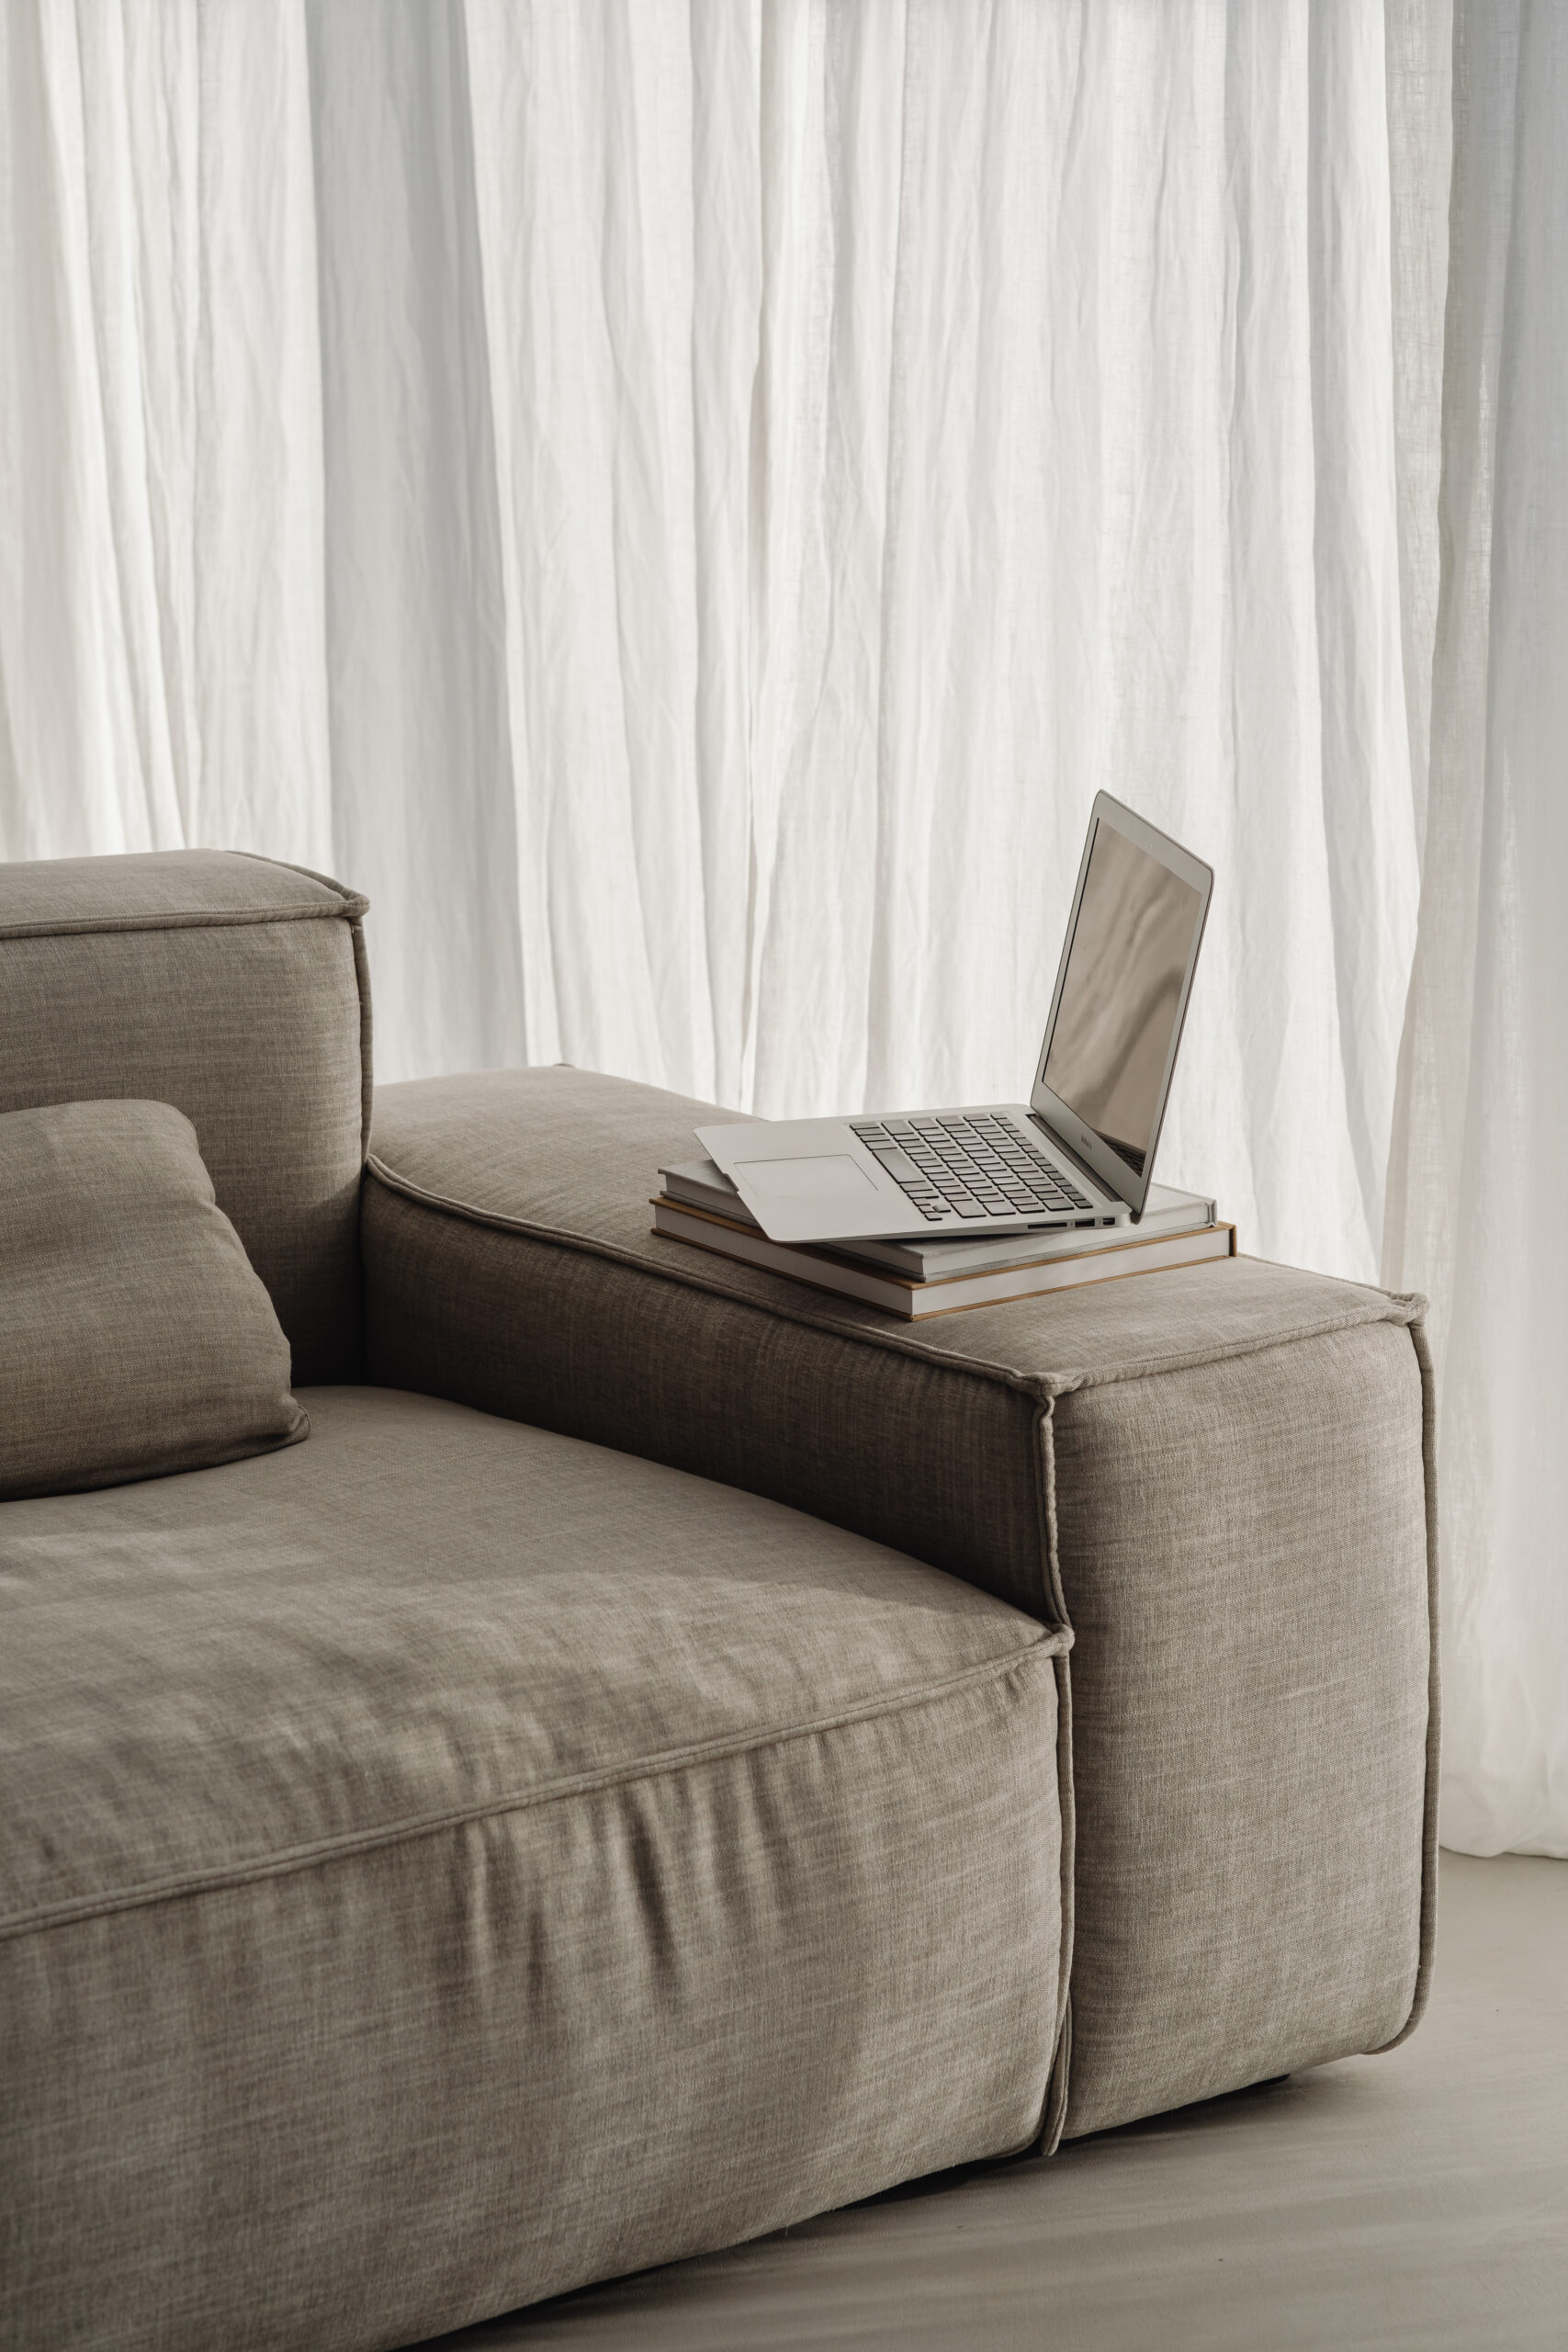 studio pure home office on the sofa books laptop macbook